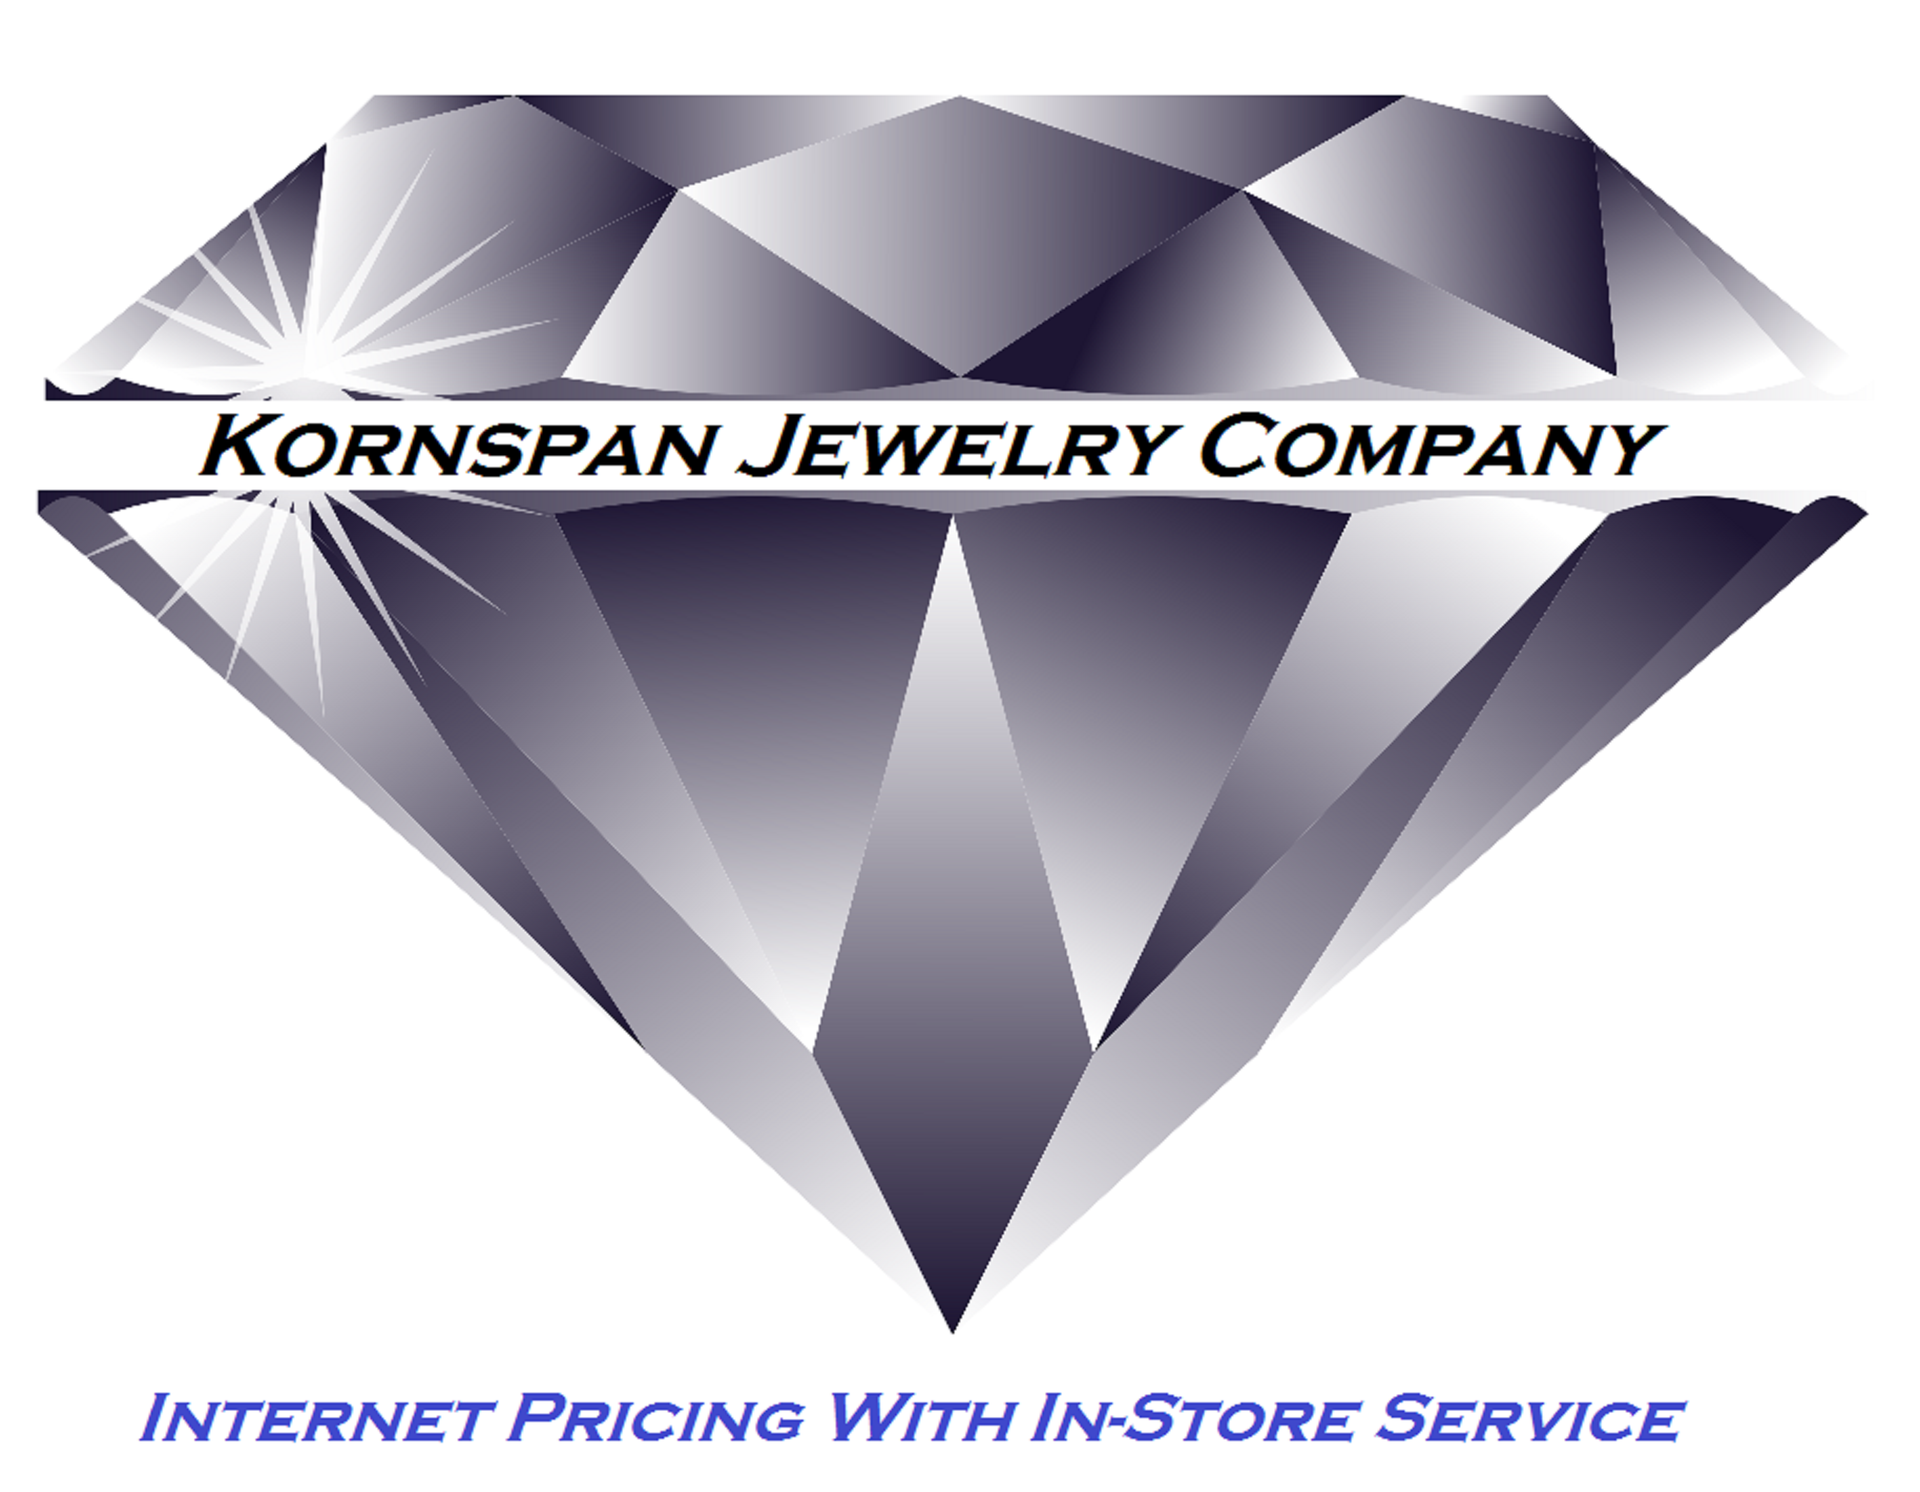 Kornspan Jewelry Company